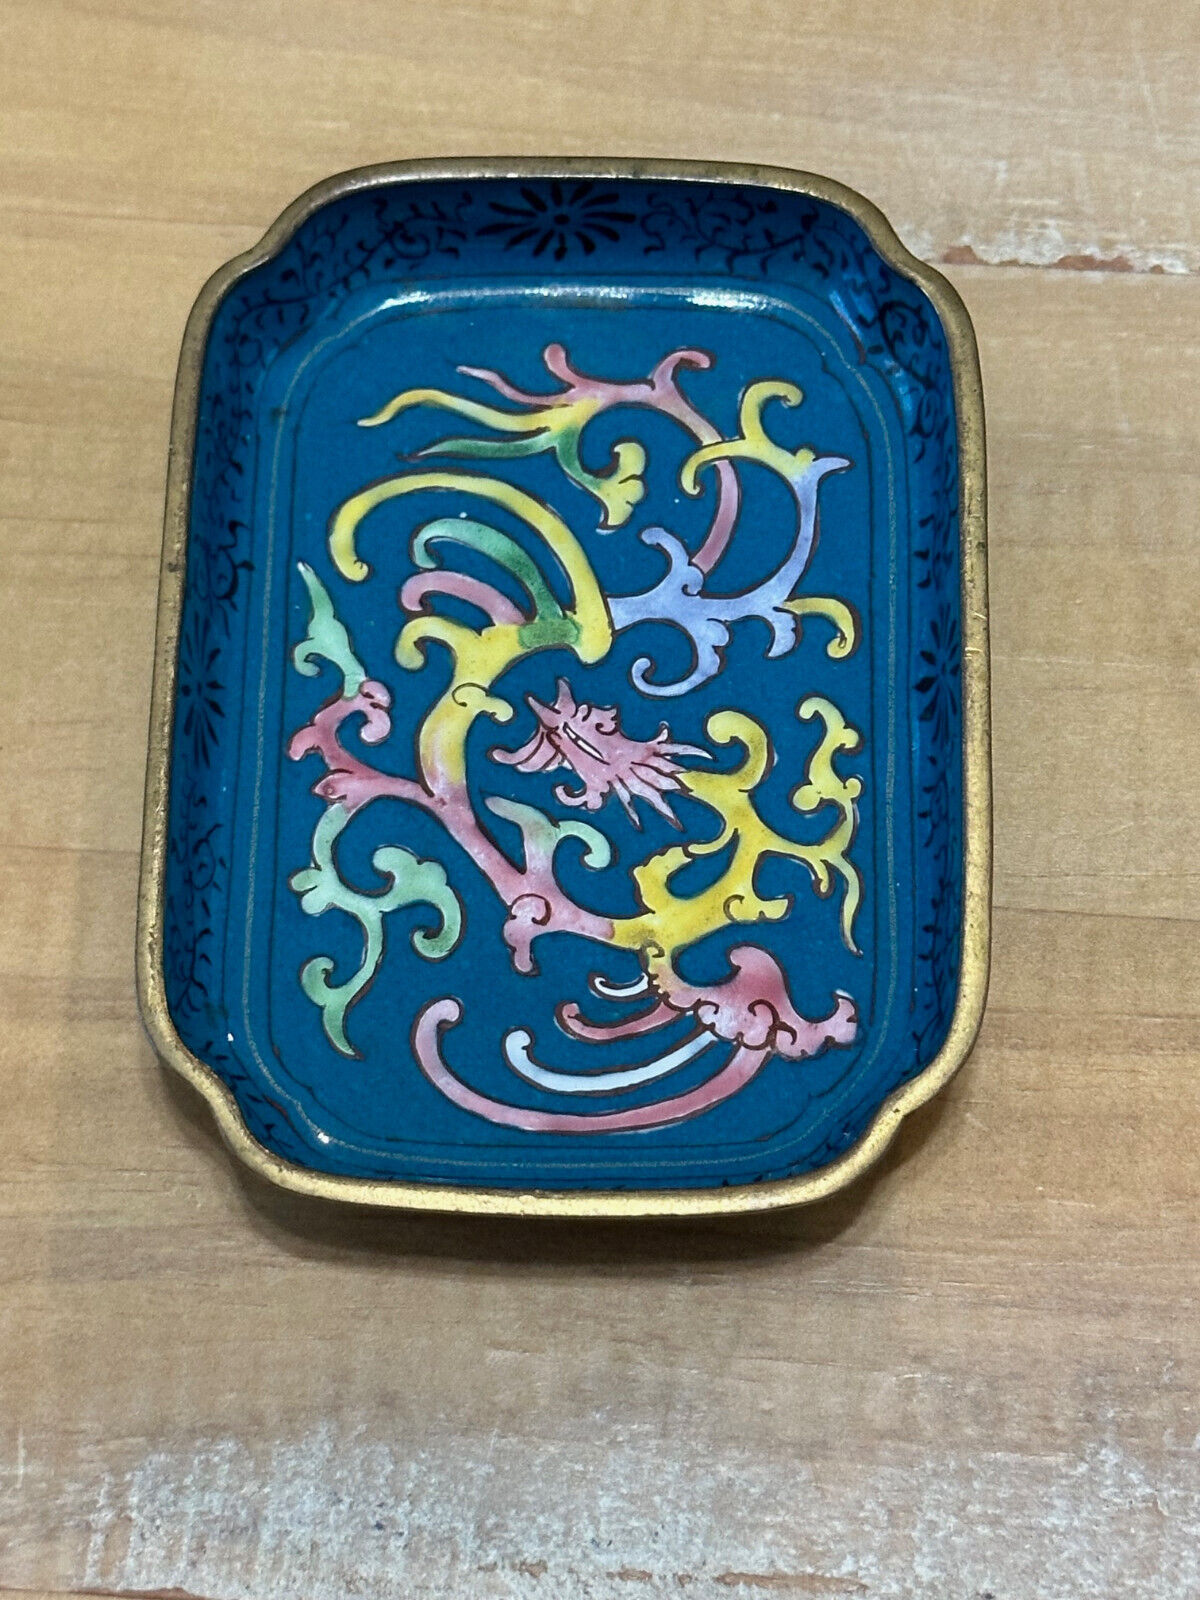 Vintage Blue Chinese Enamel on Metal Cloisonné Rectangle Trinket Dish 4” X 3”